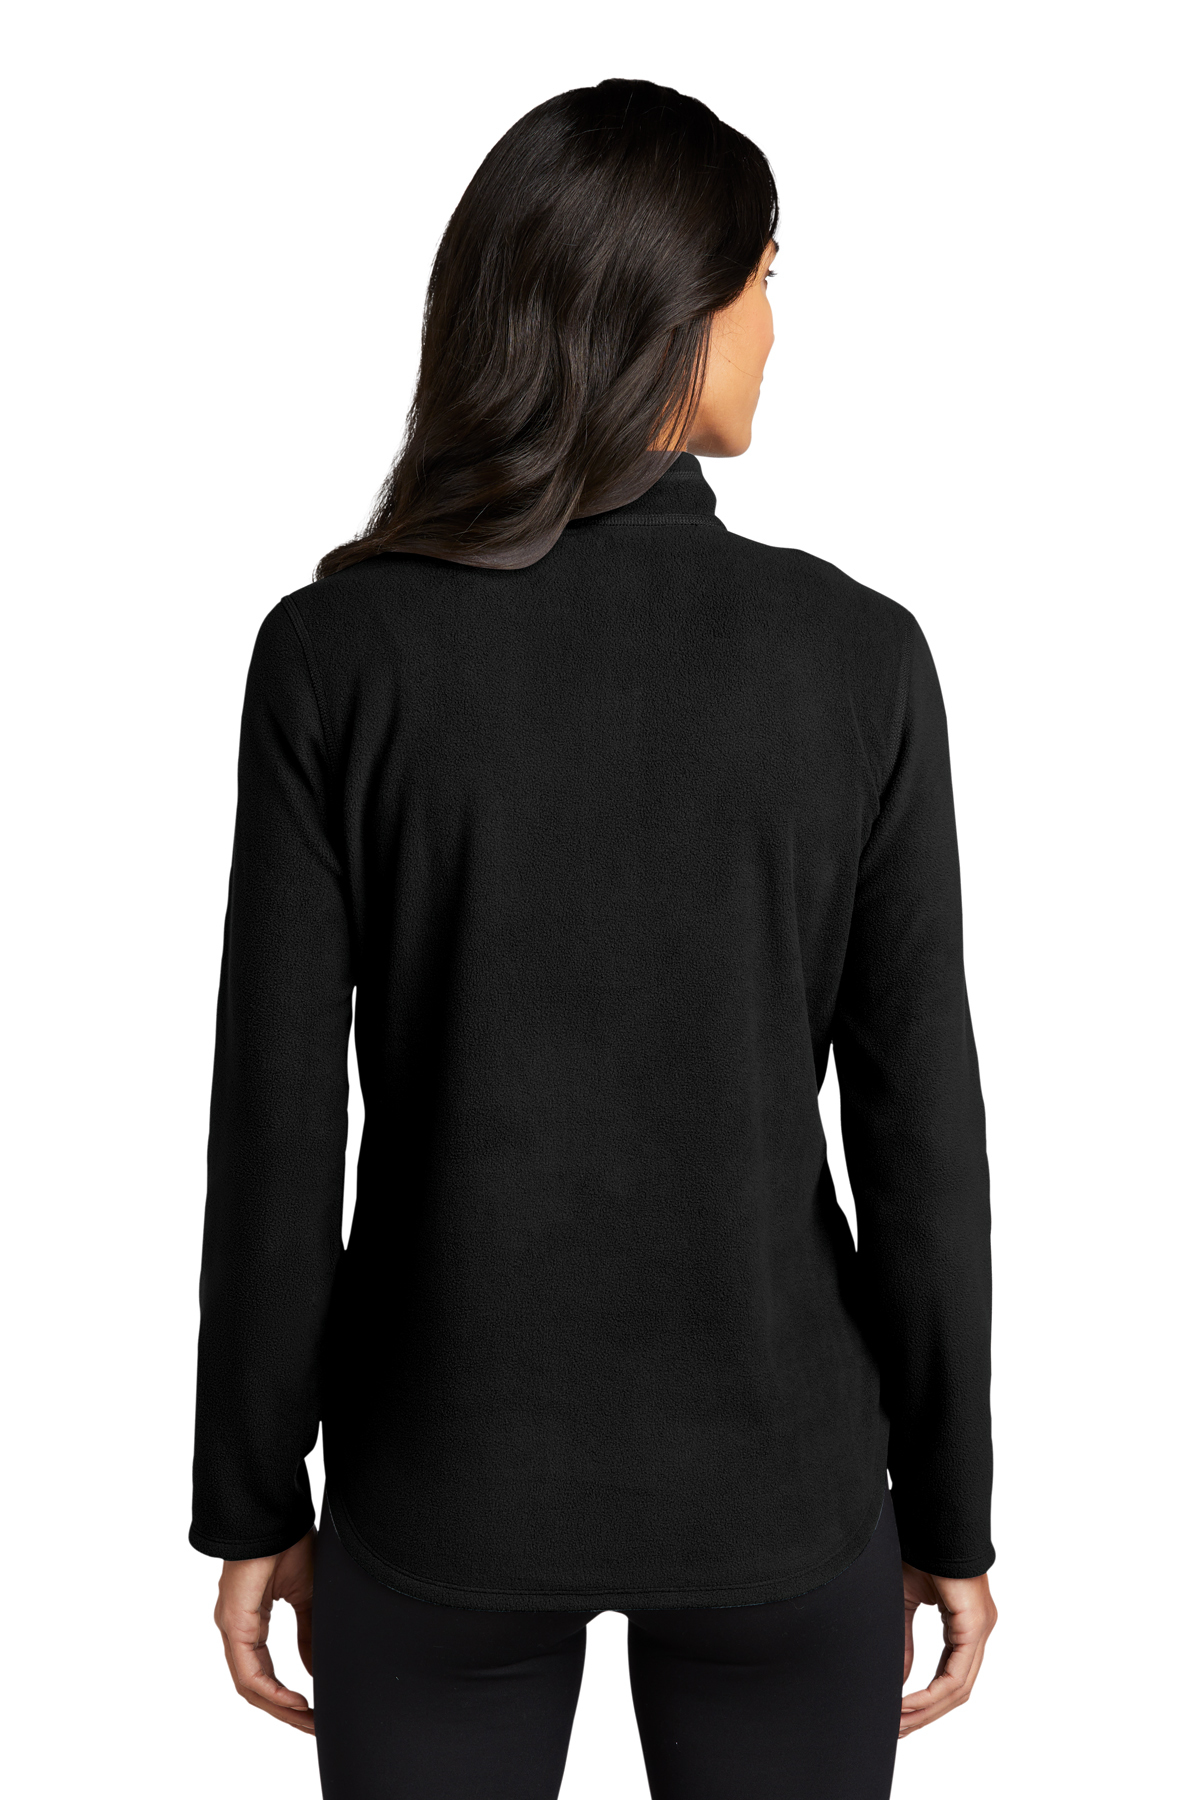 Eddie Bauer Ladies 1/2-Zip Microfleece Jacket | Product | Company Casuals